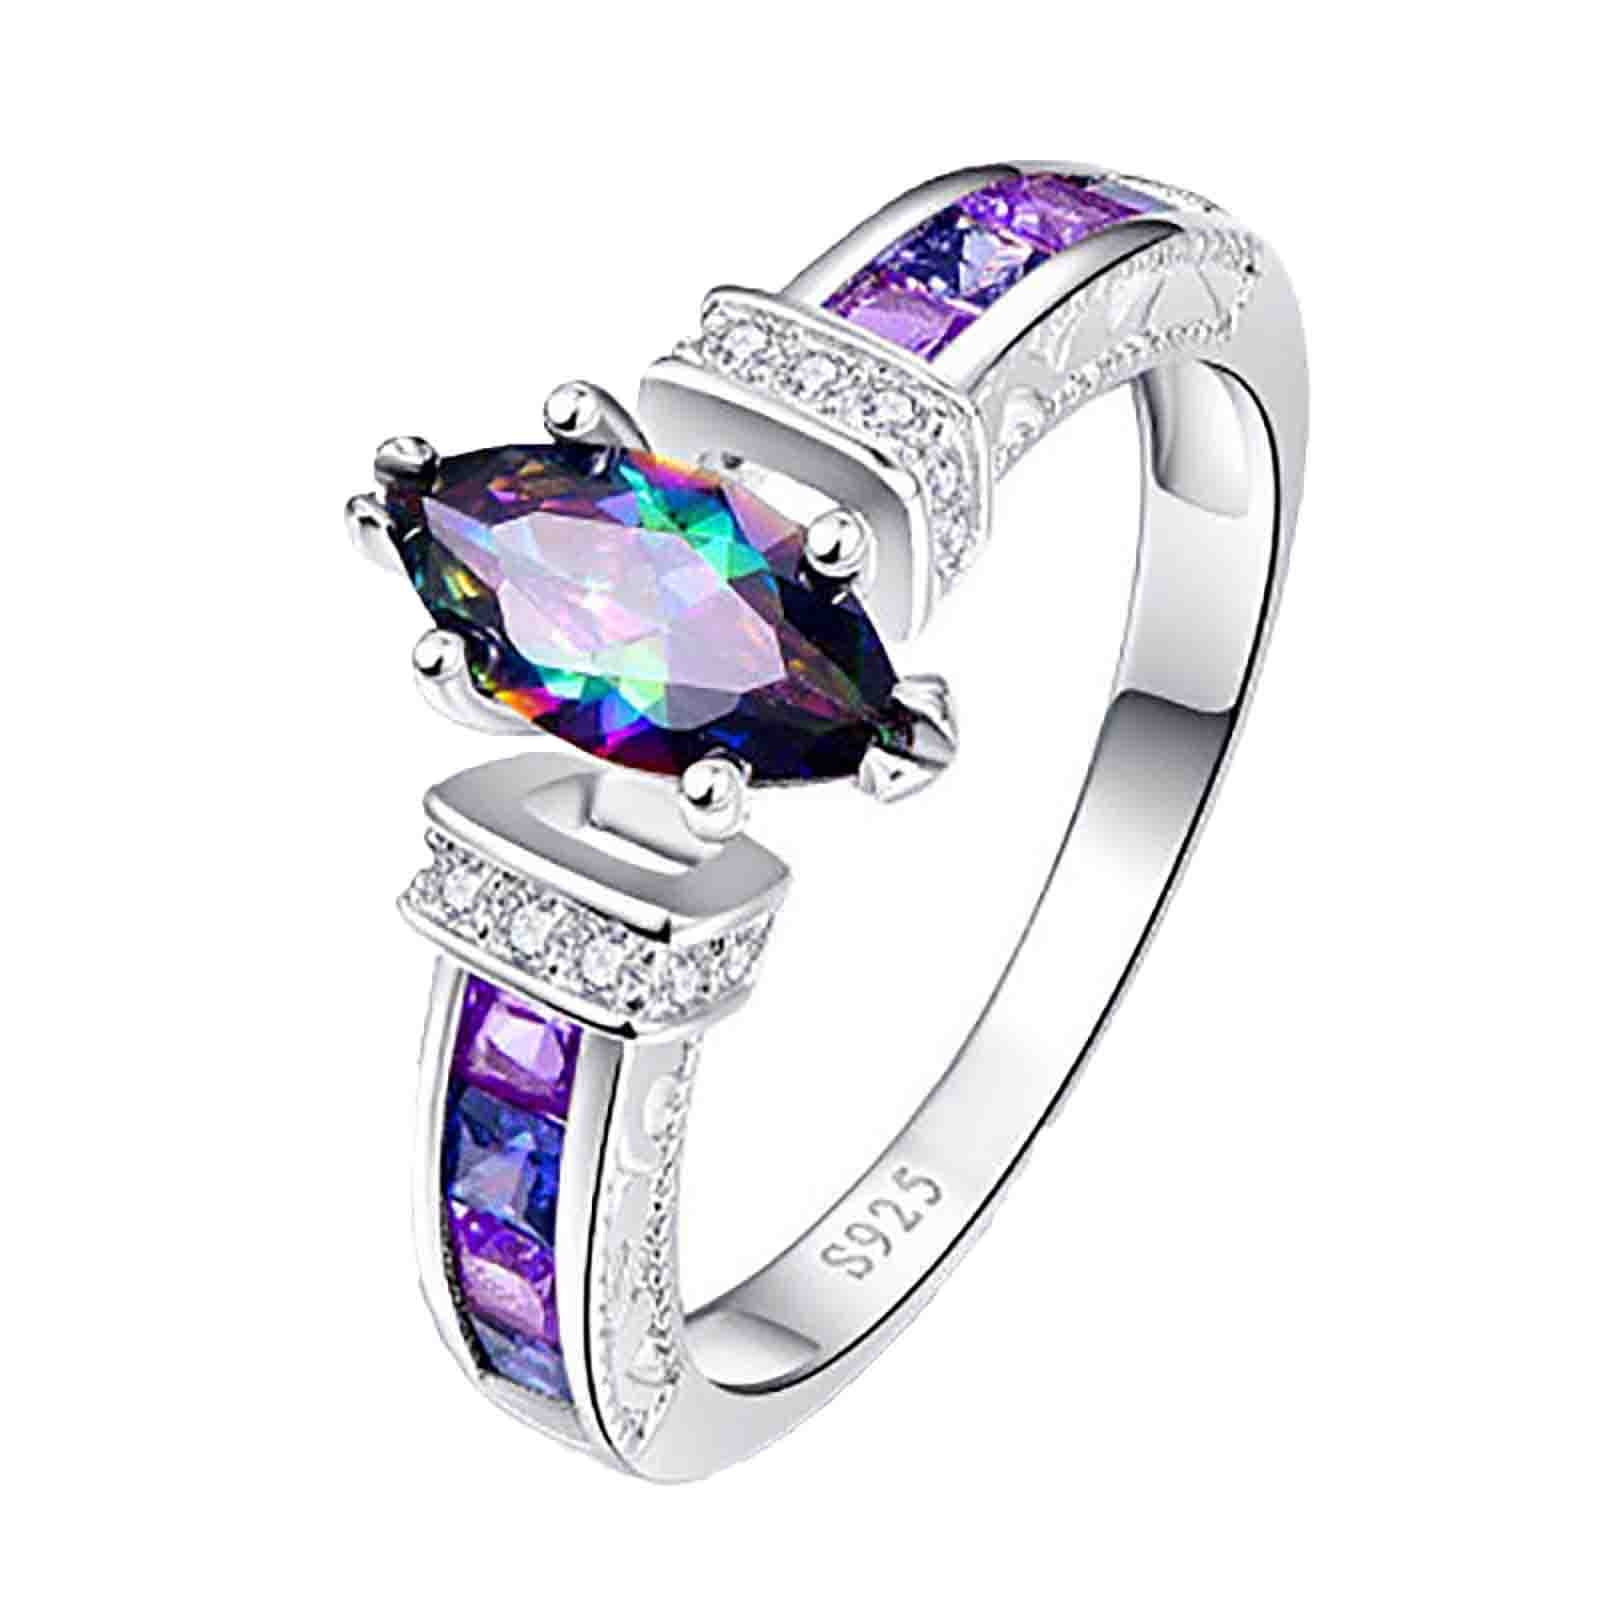 4CT White Topaz 925 Silver Women's Ring Fashion Wedding Engagement Jewelry 6-10